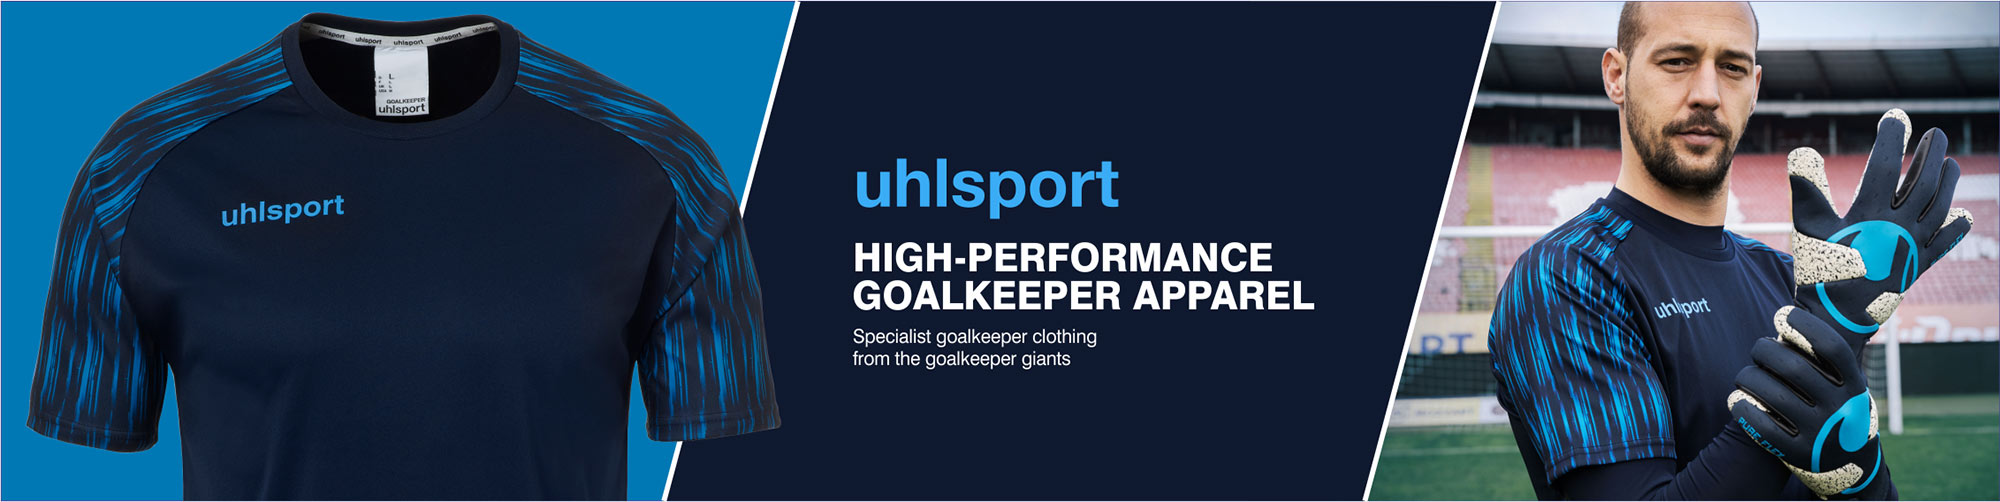 Uhlsport Junior Goalkeeper Clothing apparel